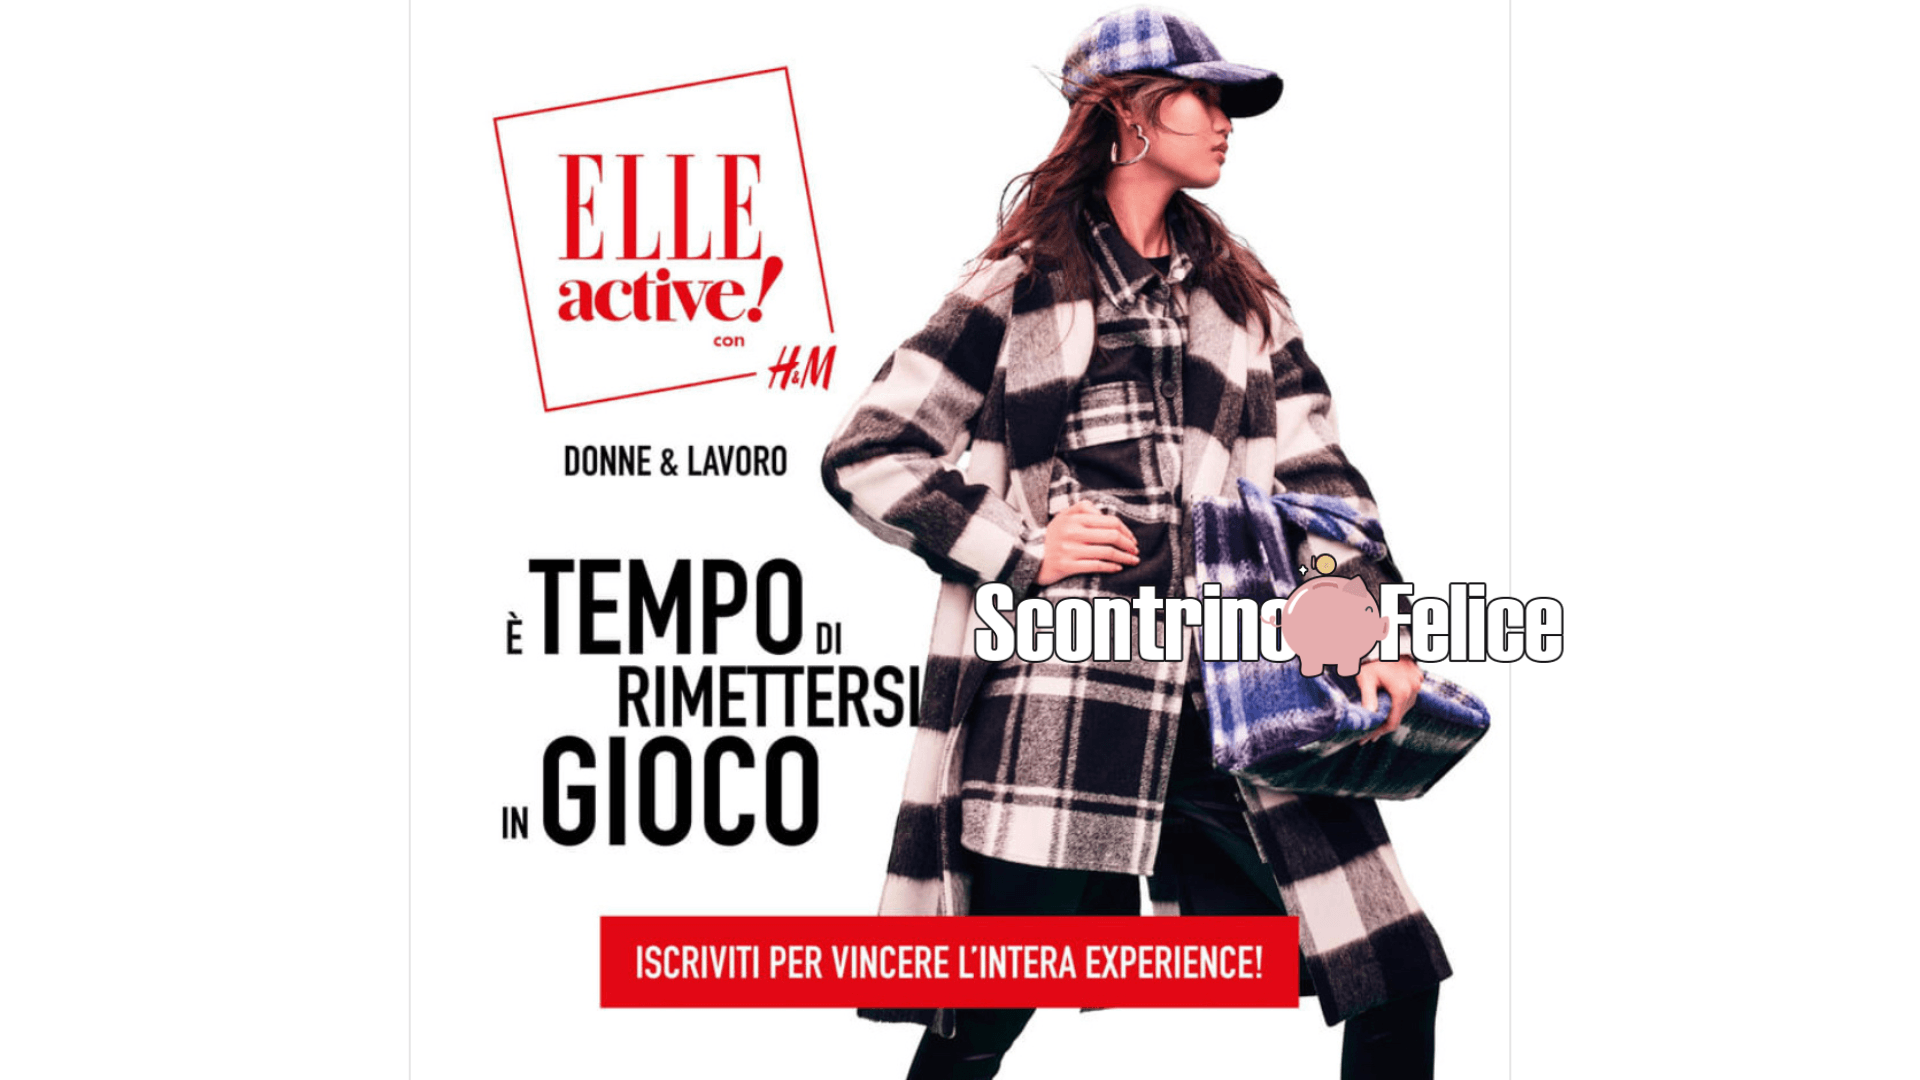 Vinci un weekend per 2 persone a Milano per partecipare a Elle active 2